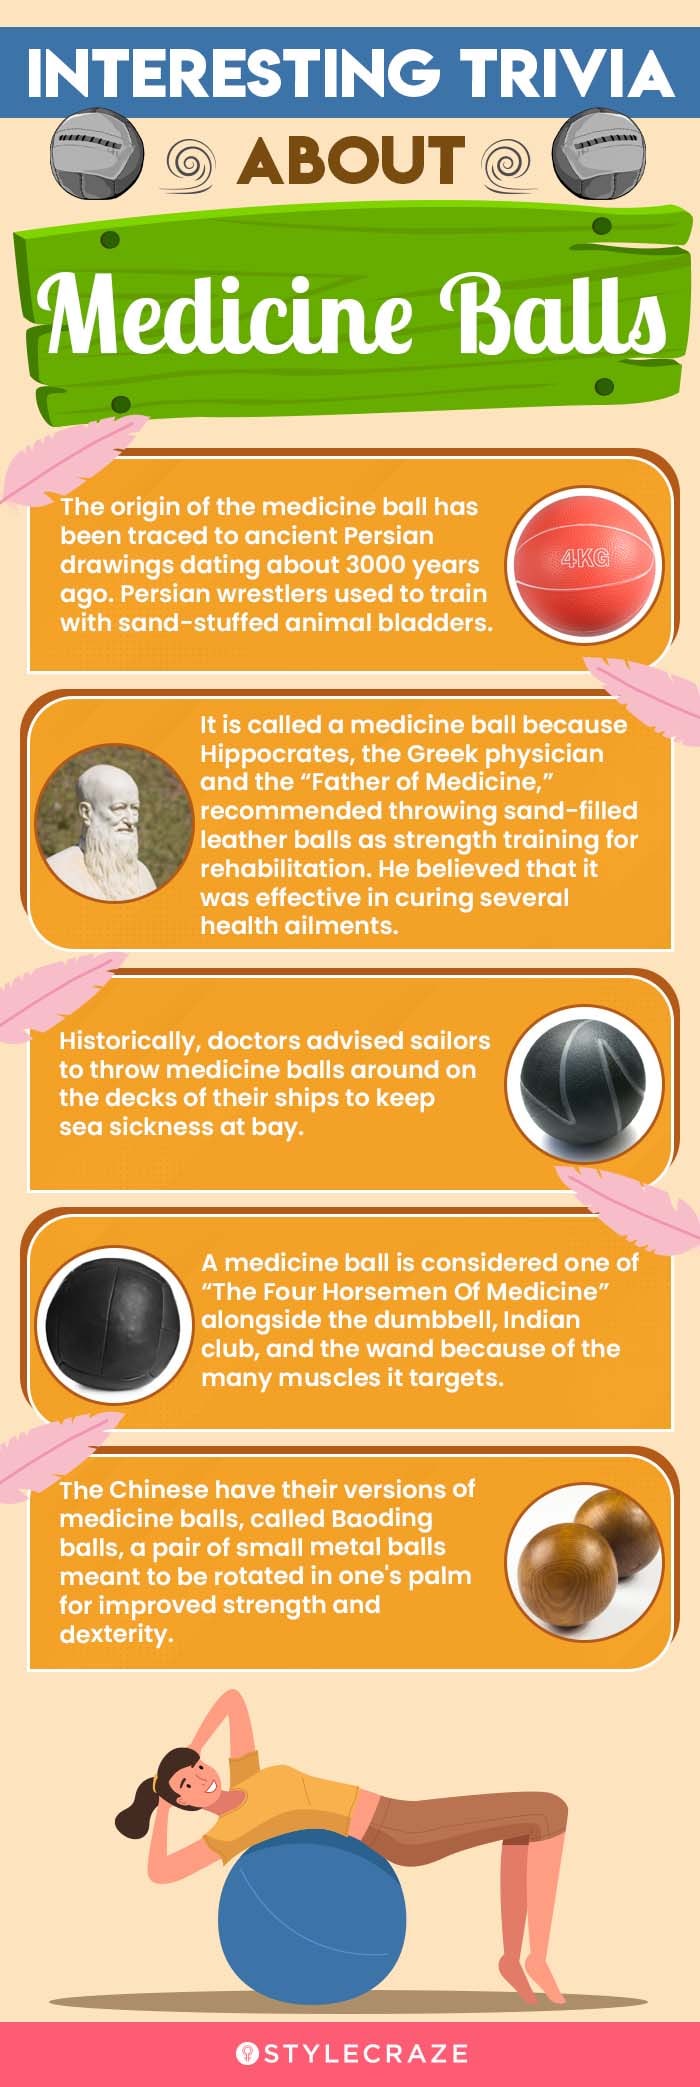 interesting trivia about medicine balls [infographic]